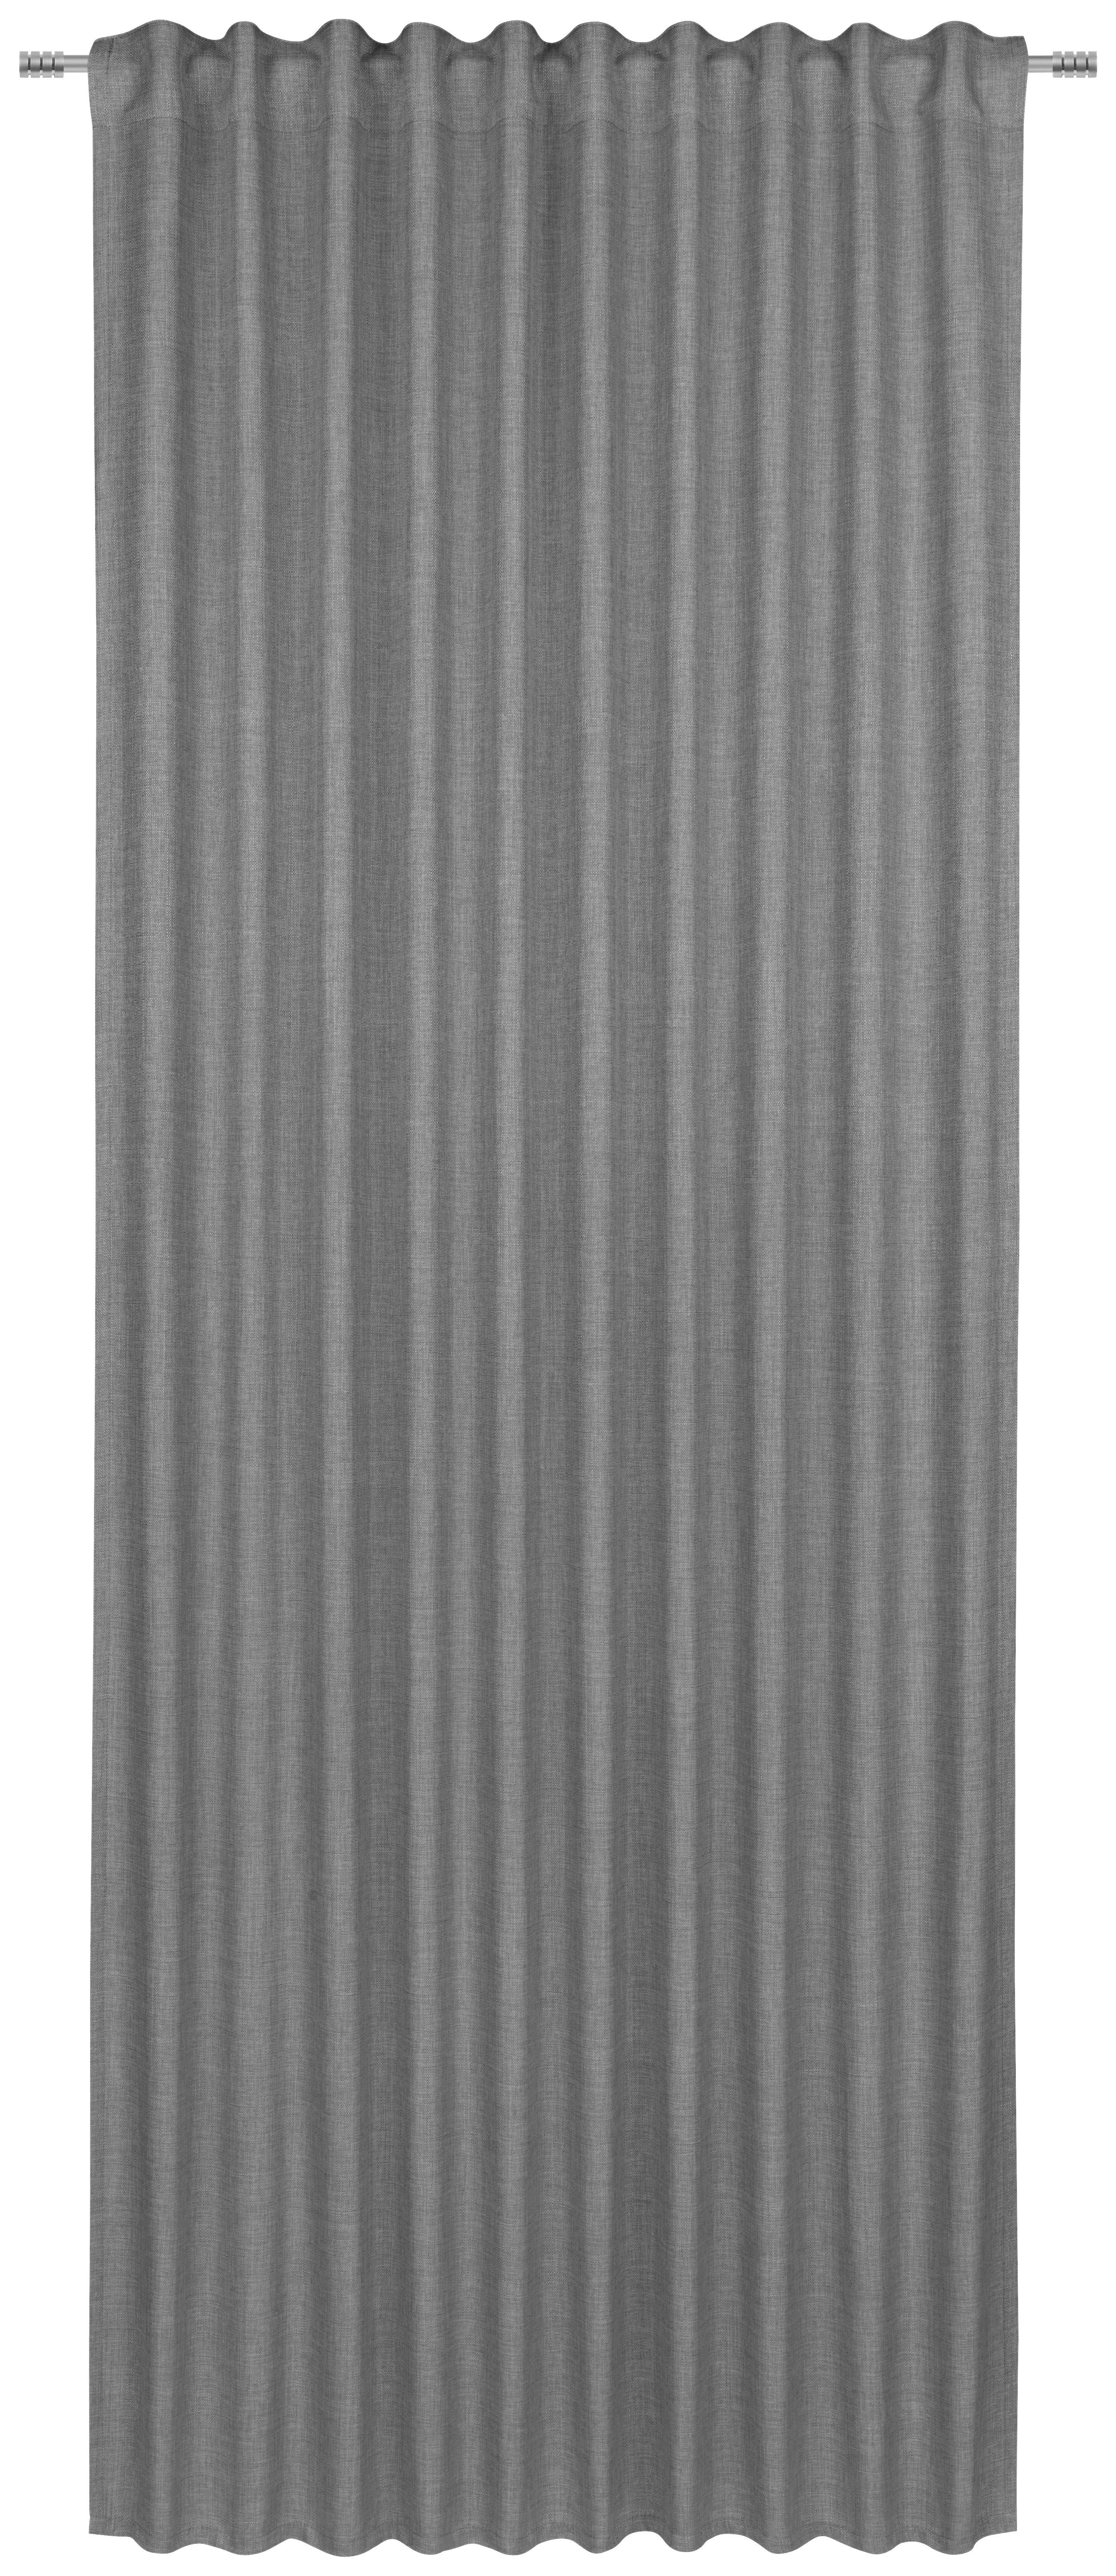 FERTIGVORHANG FREDDY blickdicht 140/245 cm   - Grau, Basics, Textil (140/245cm) - Boxxx